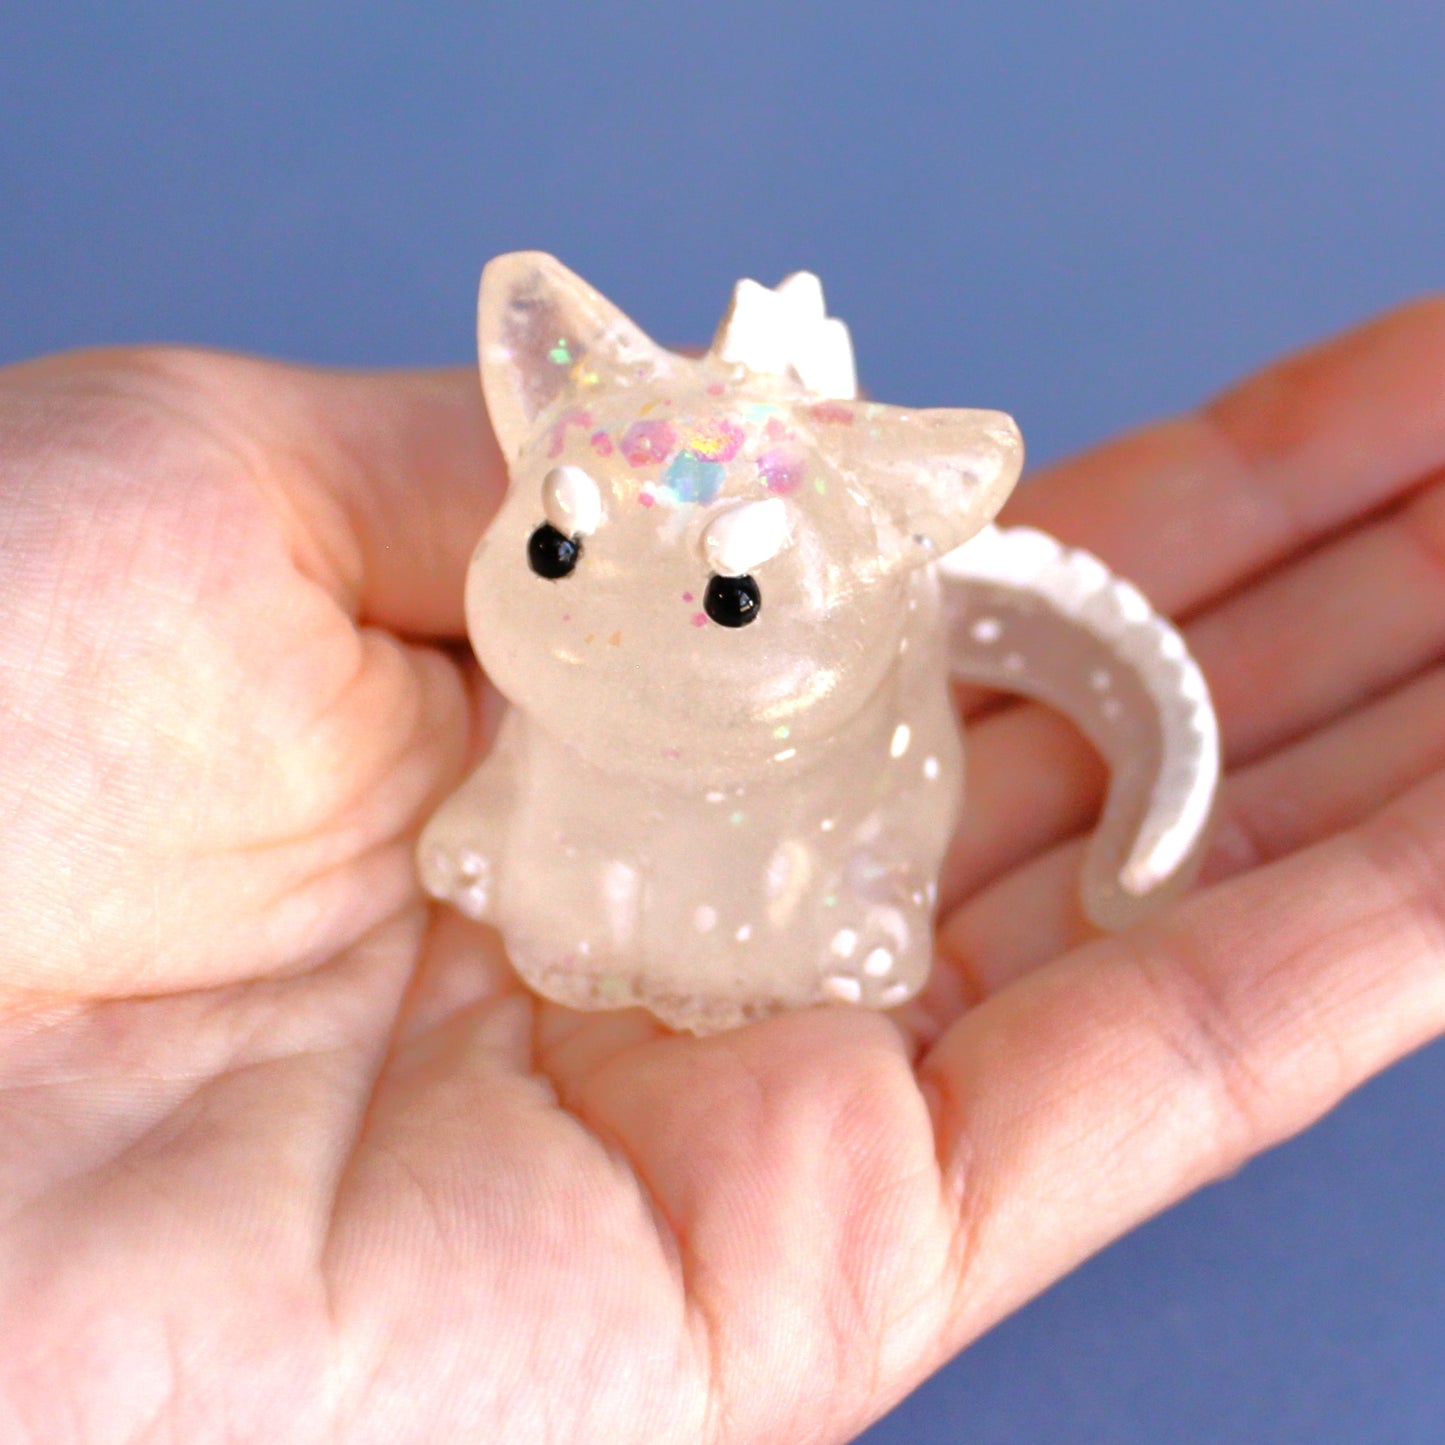 "Let it Snow" Dinocat Figure. Handmade Resin Art Toy Mini Fig / Adorable Cat Dinosaur / Desk Decoration Collectable / Chibi